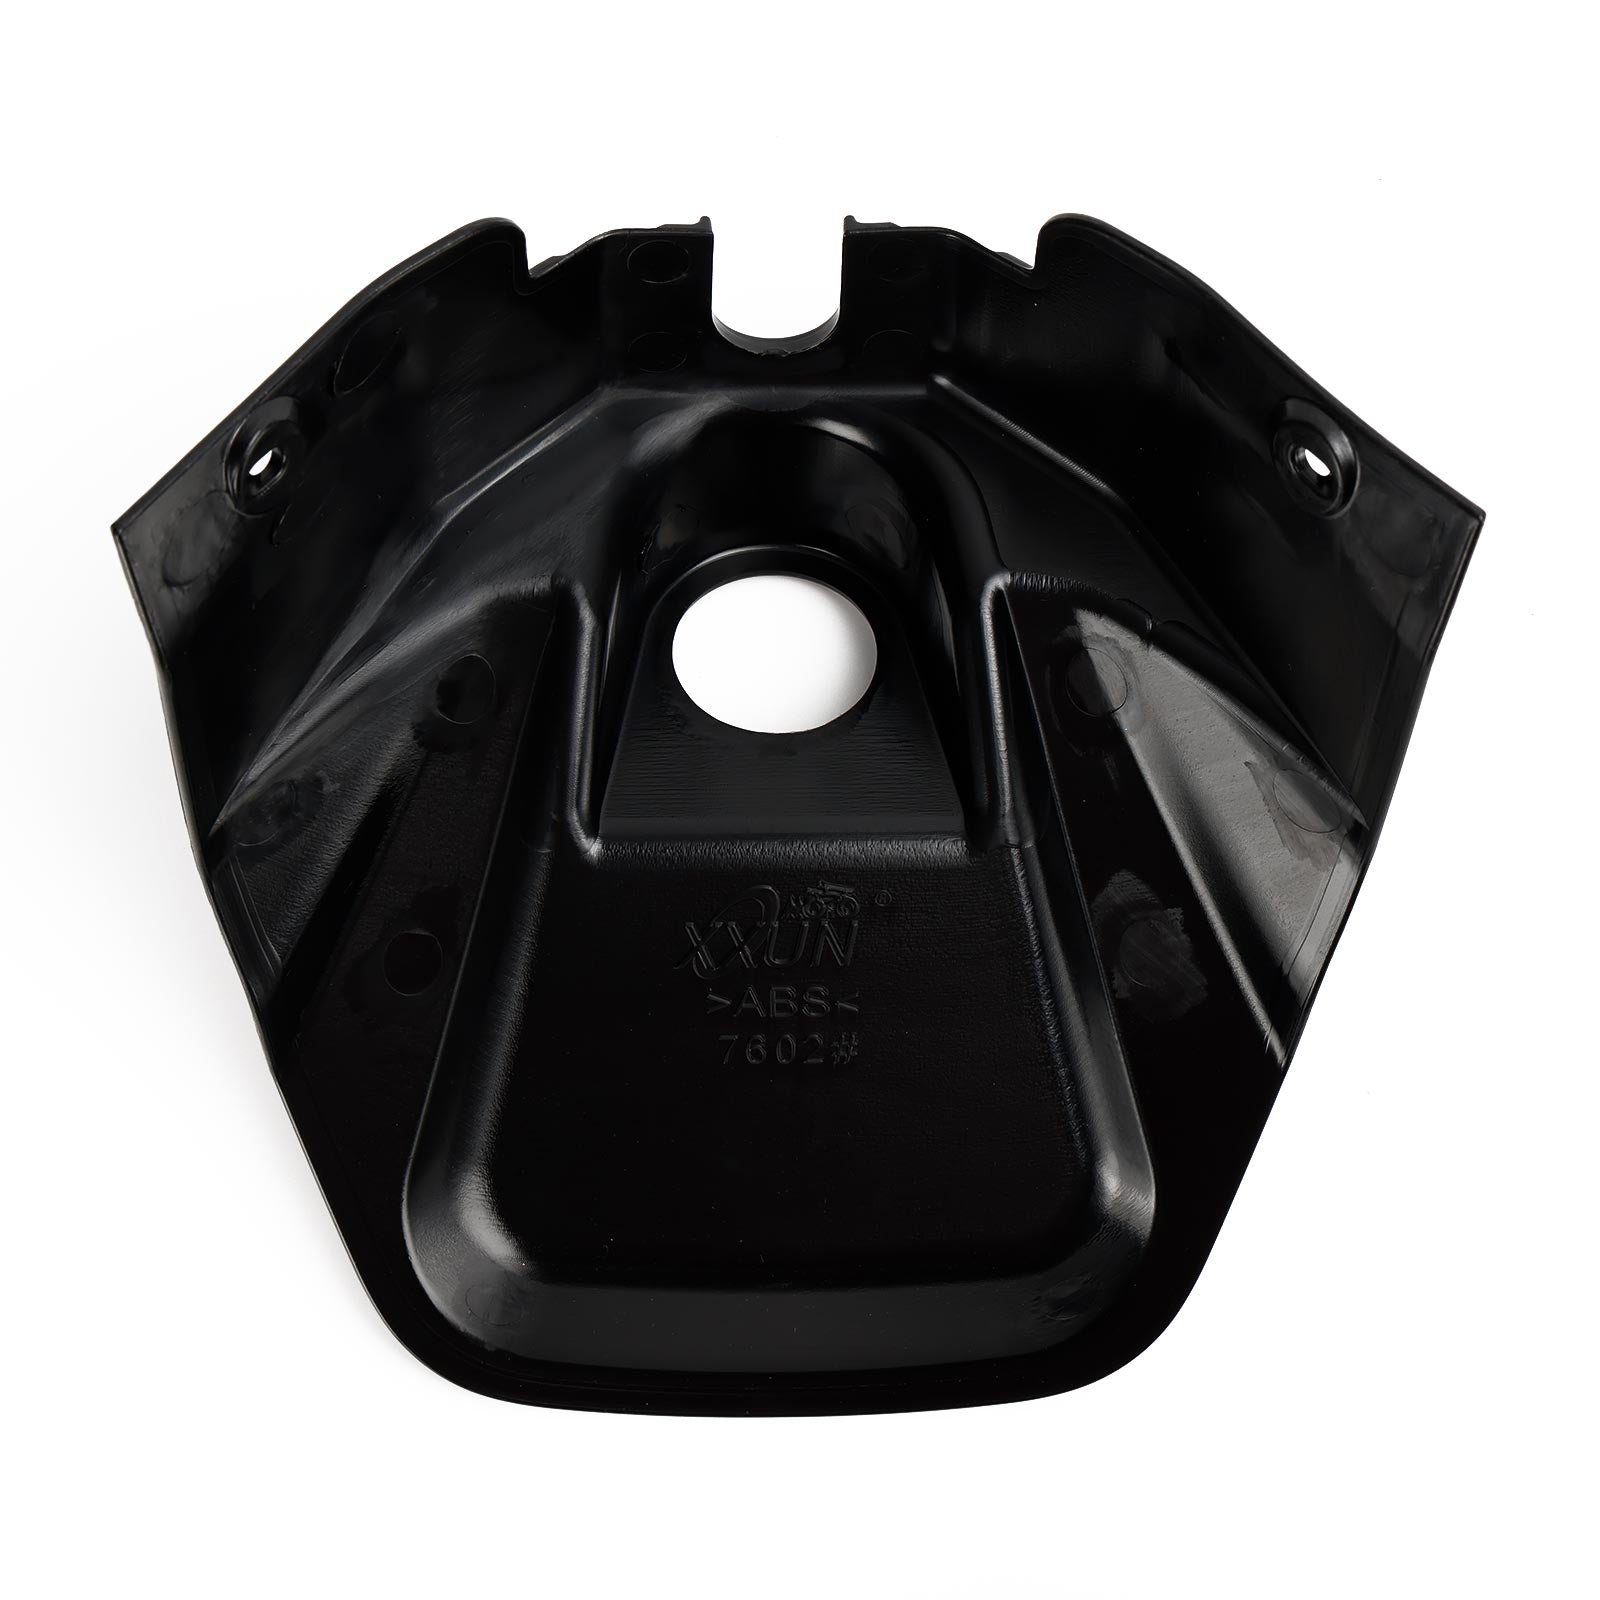 Unpainted ABS Front Key Lock Cowl Trim Cover for Aprilia RS 660 2020-2022